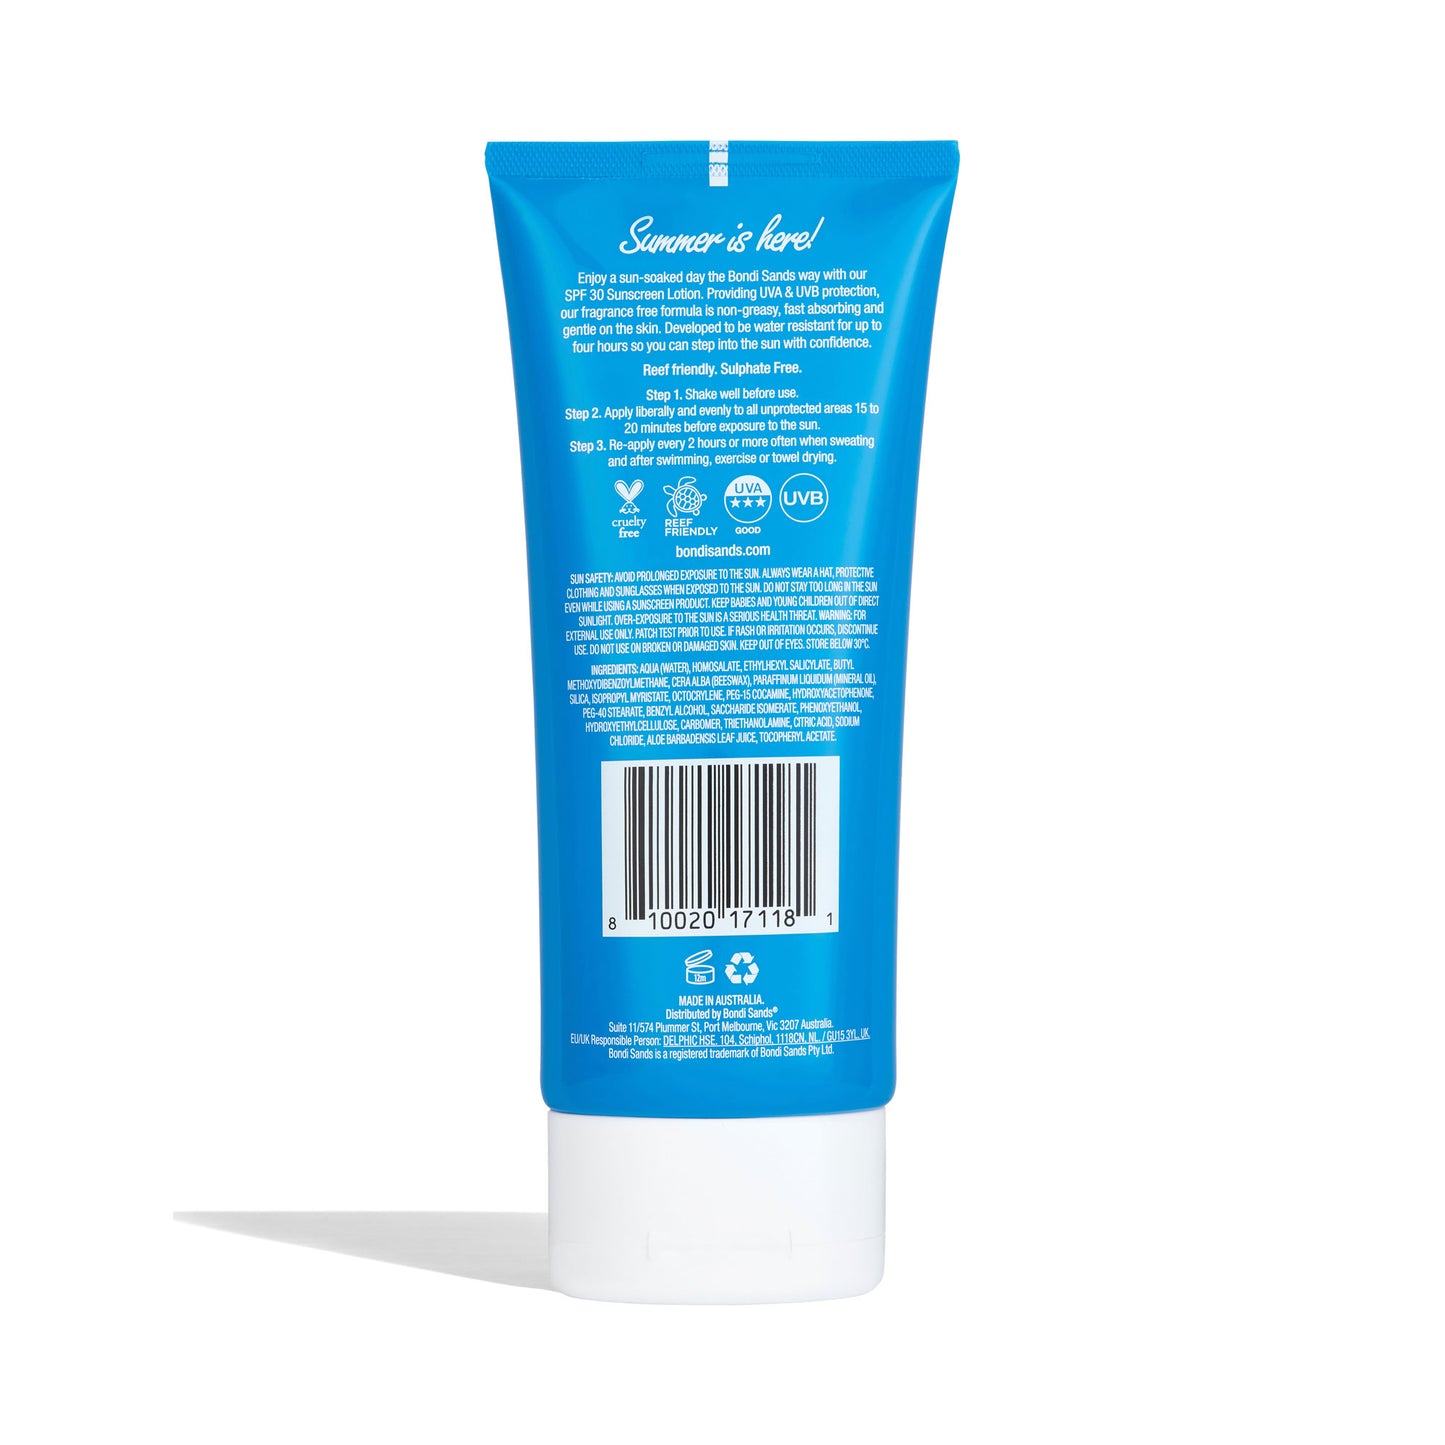 Bondi Sands -SPF 30 Fragrance Free Sunscreen Lotion